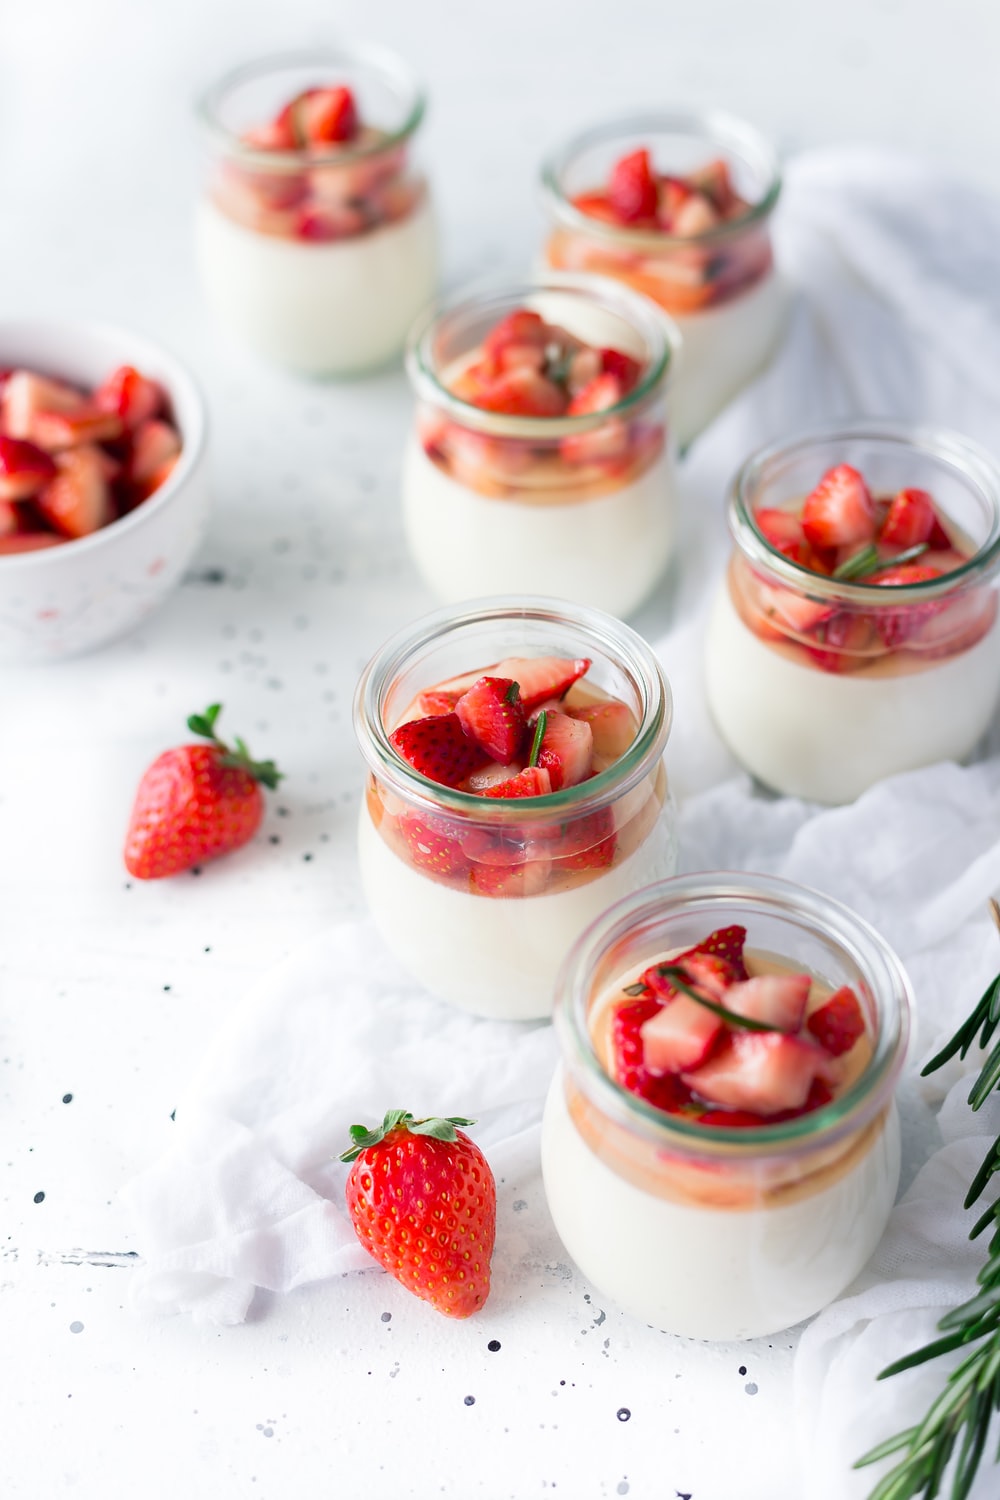 Strawberry Dessert Picture. Download Free Image